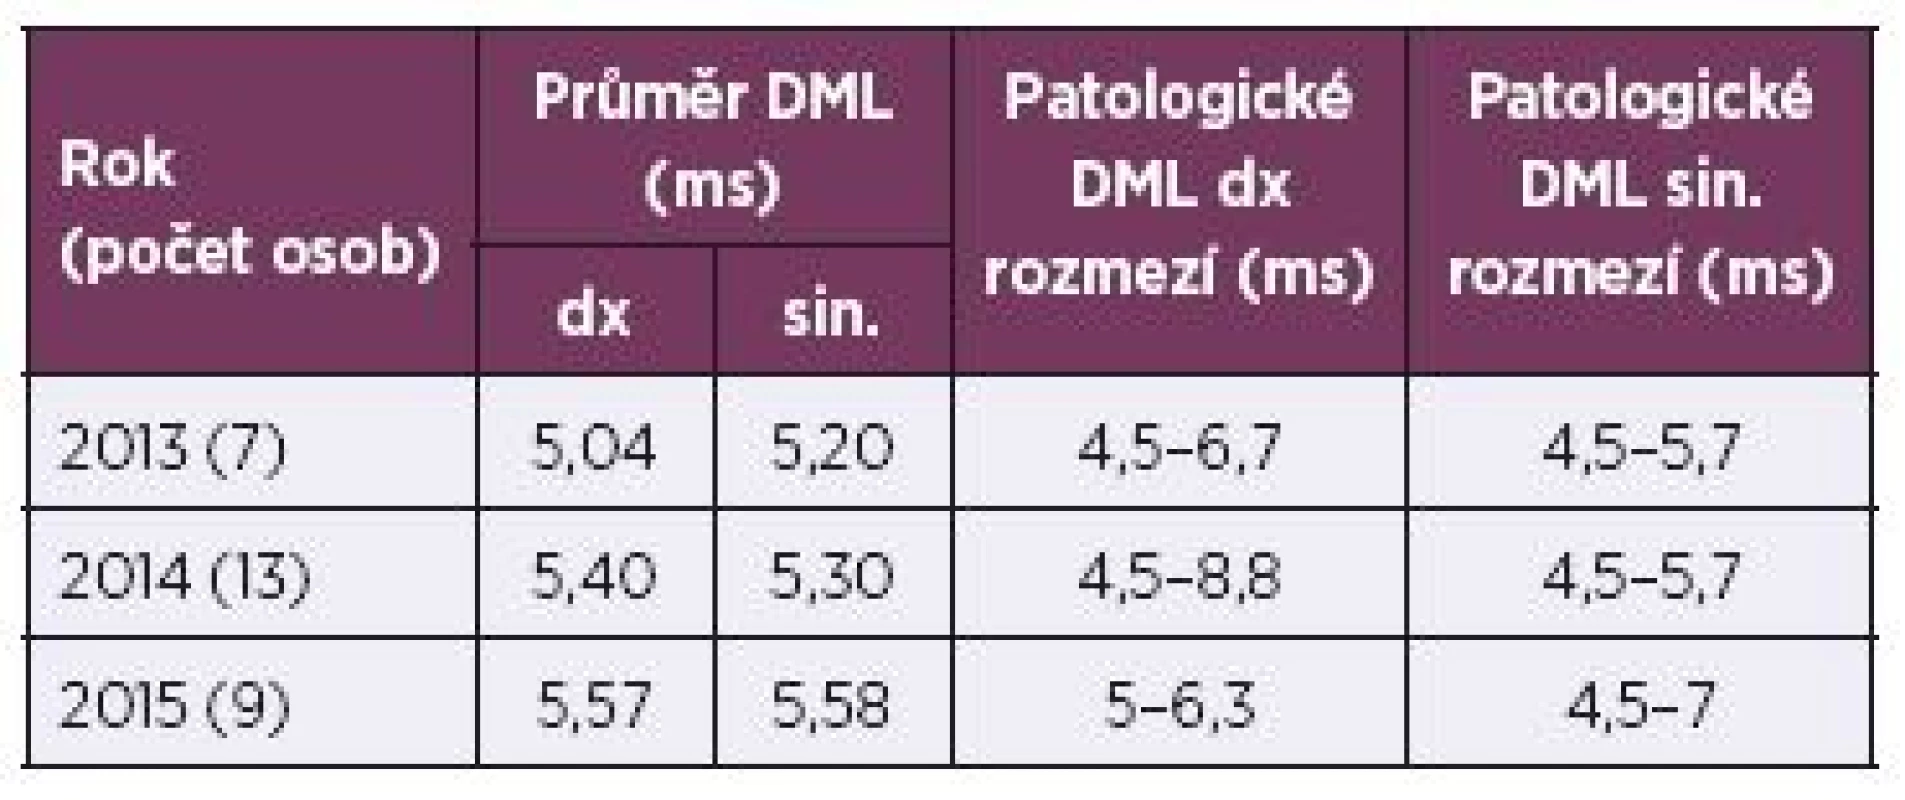 Sestava 29 osob s patologickým DML n. medianus (PK)